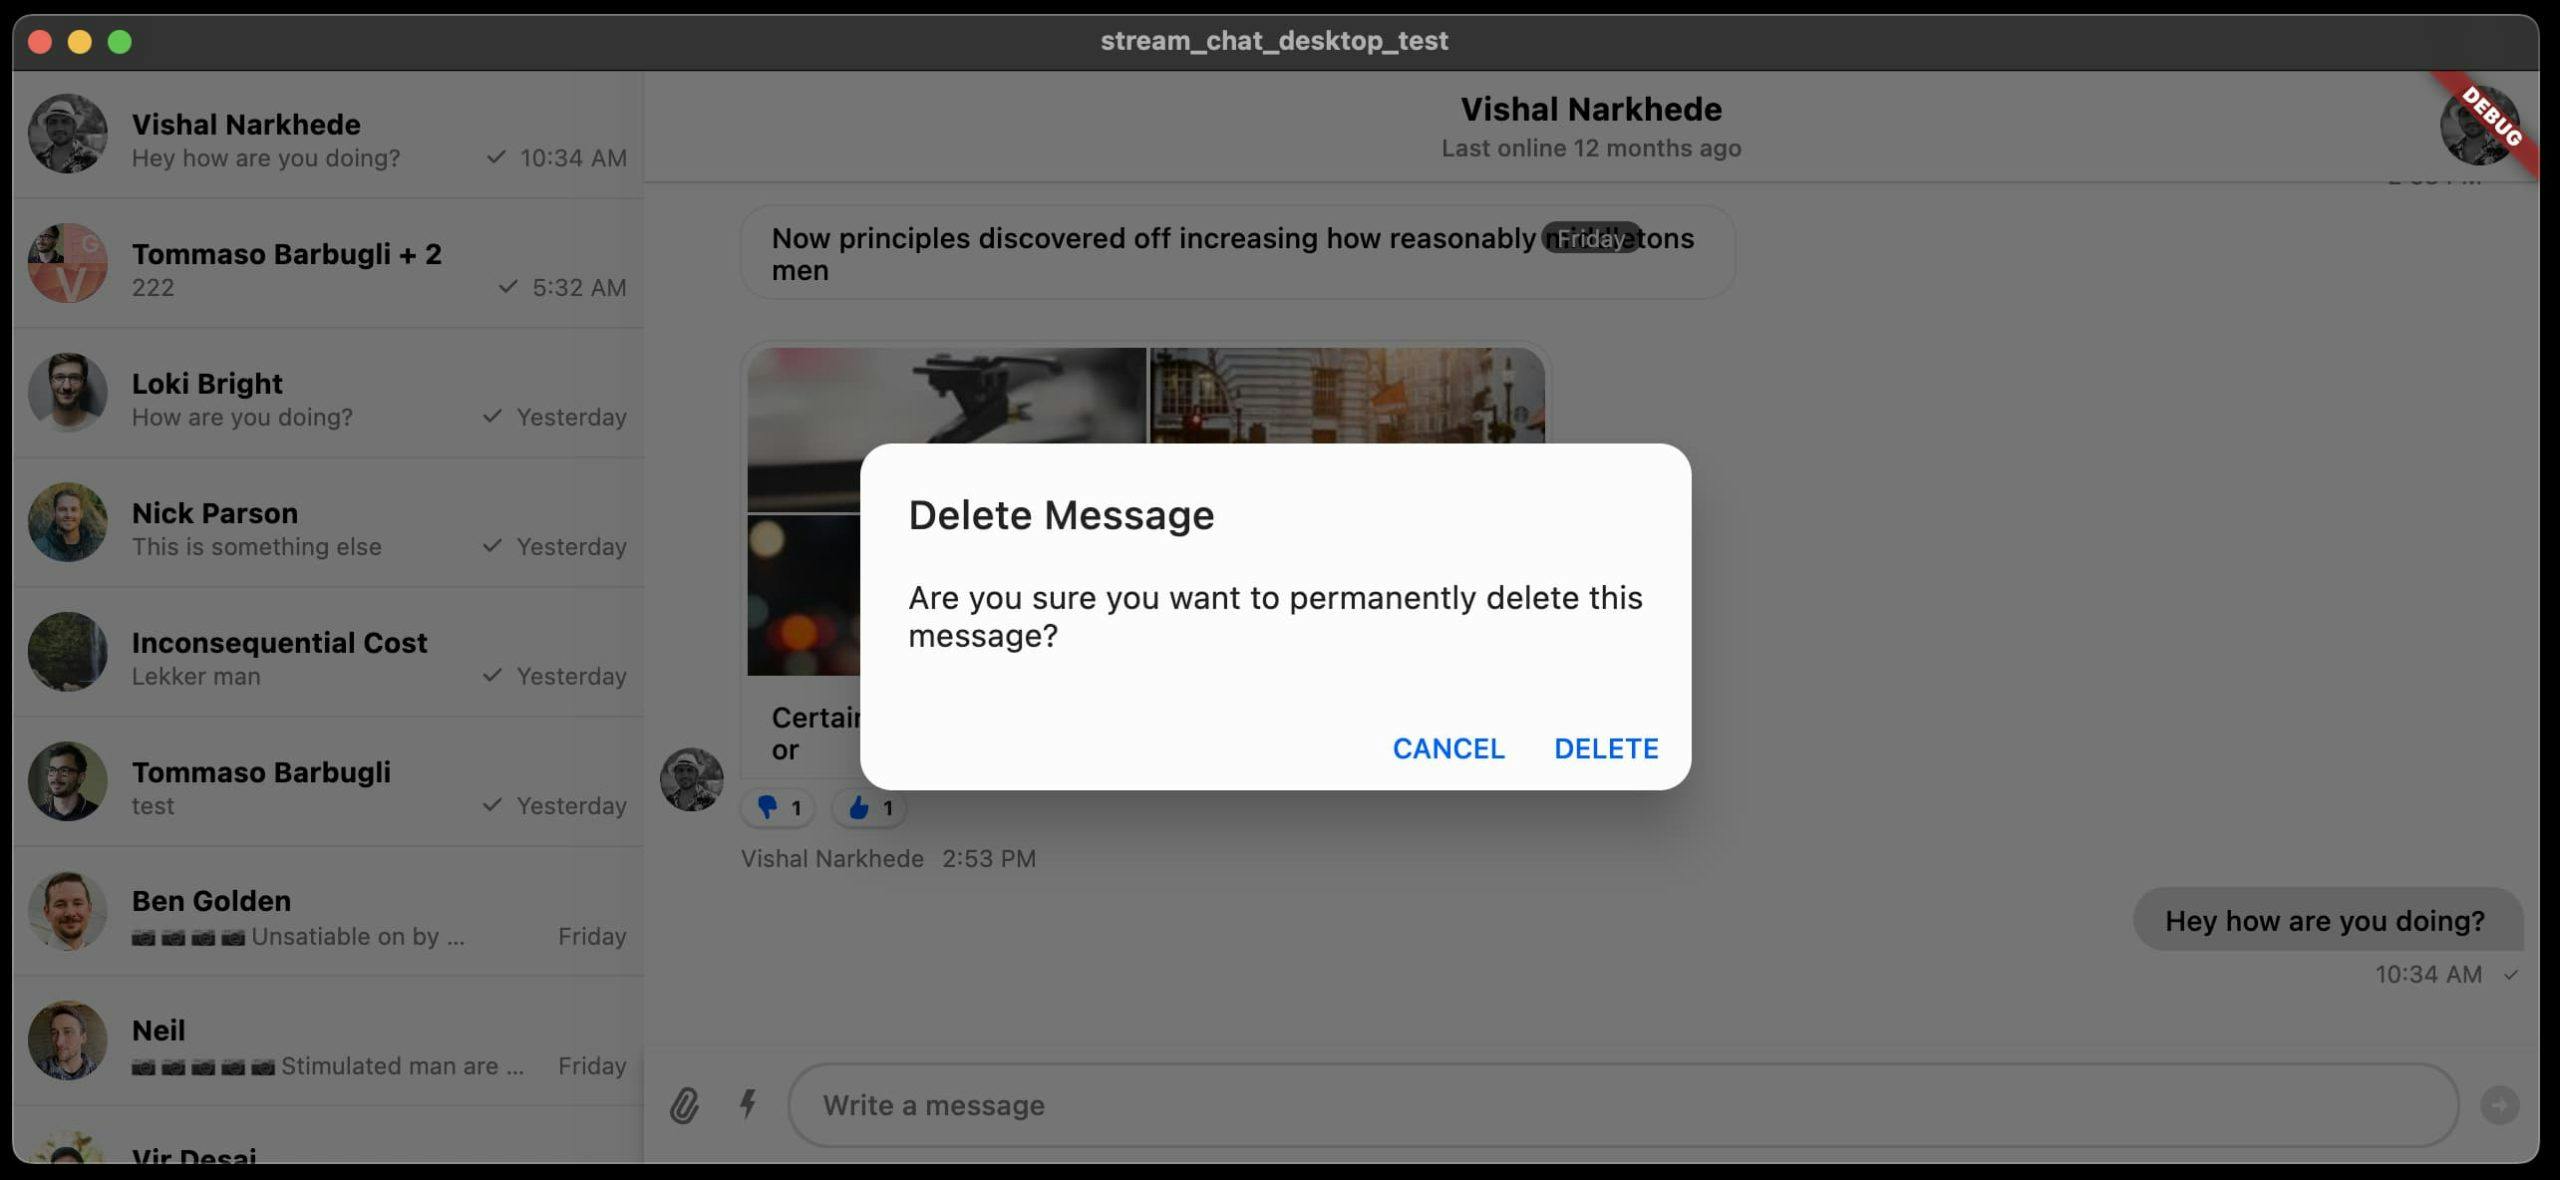 Stream Chat Flutter - delete message desktop